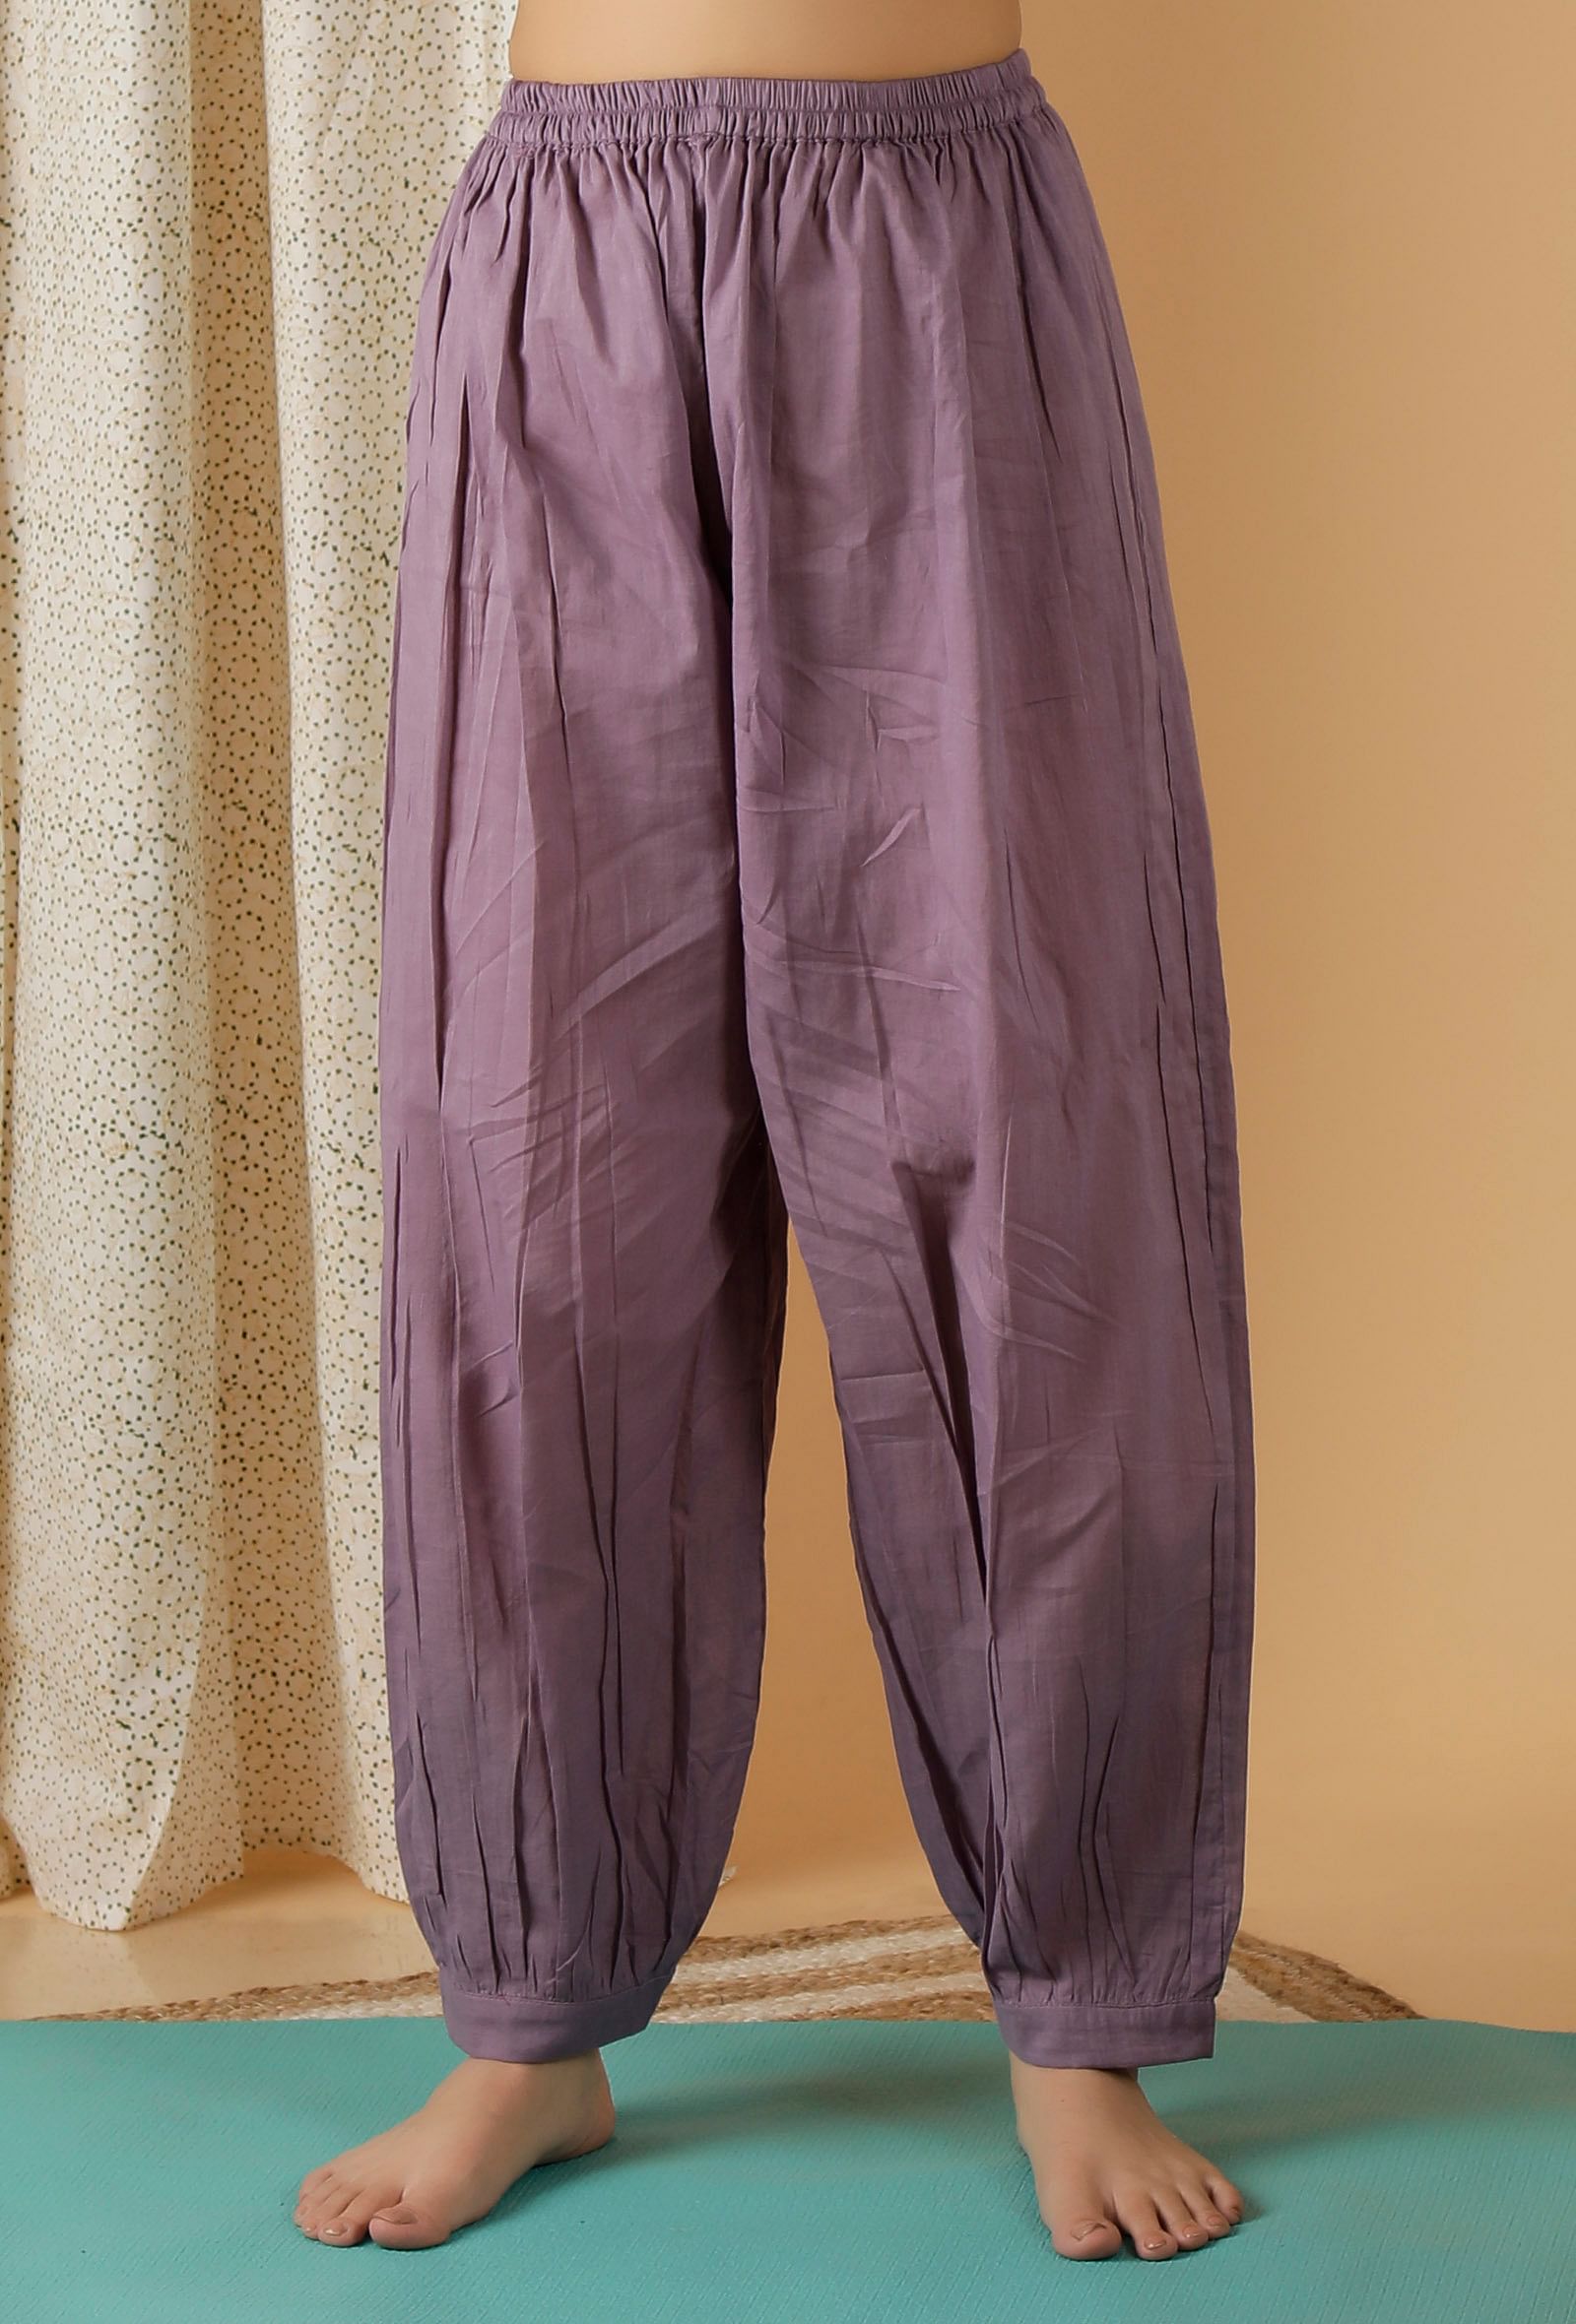 Whitewhale Mens Womens Cotton Printed Harem Pants Pockets Yoga Trouser